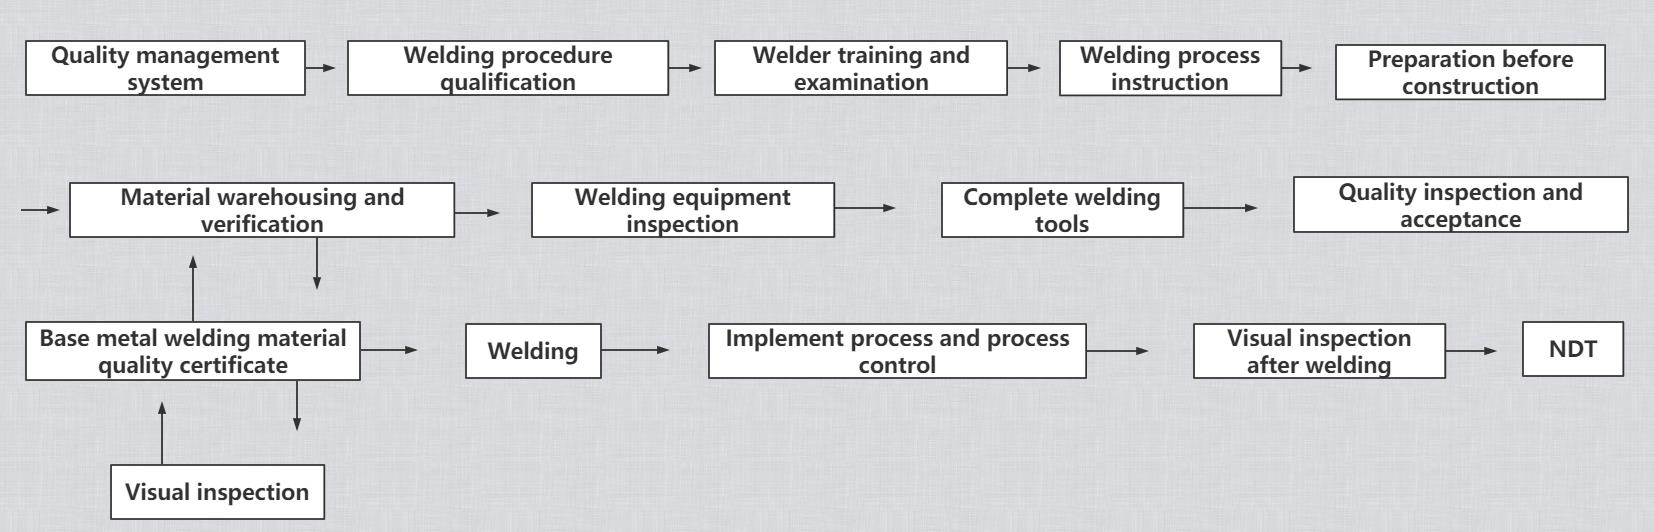 Welding process